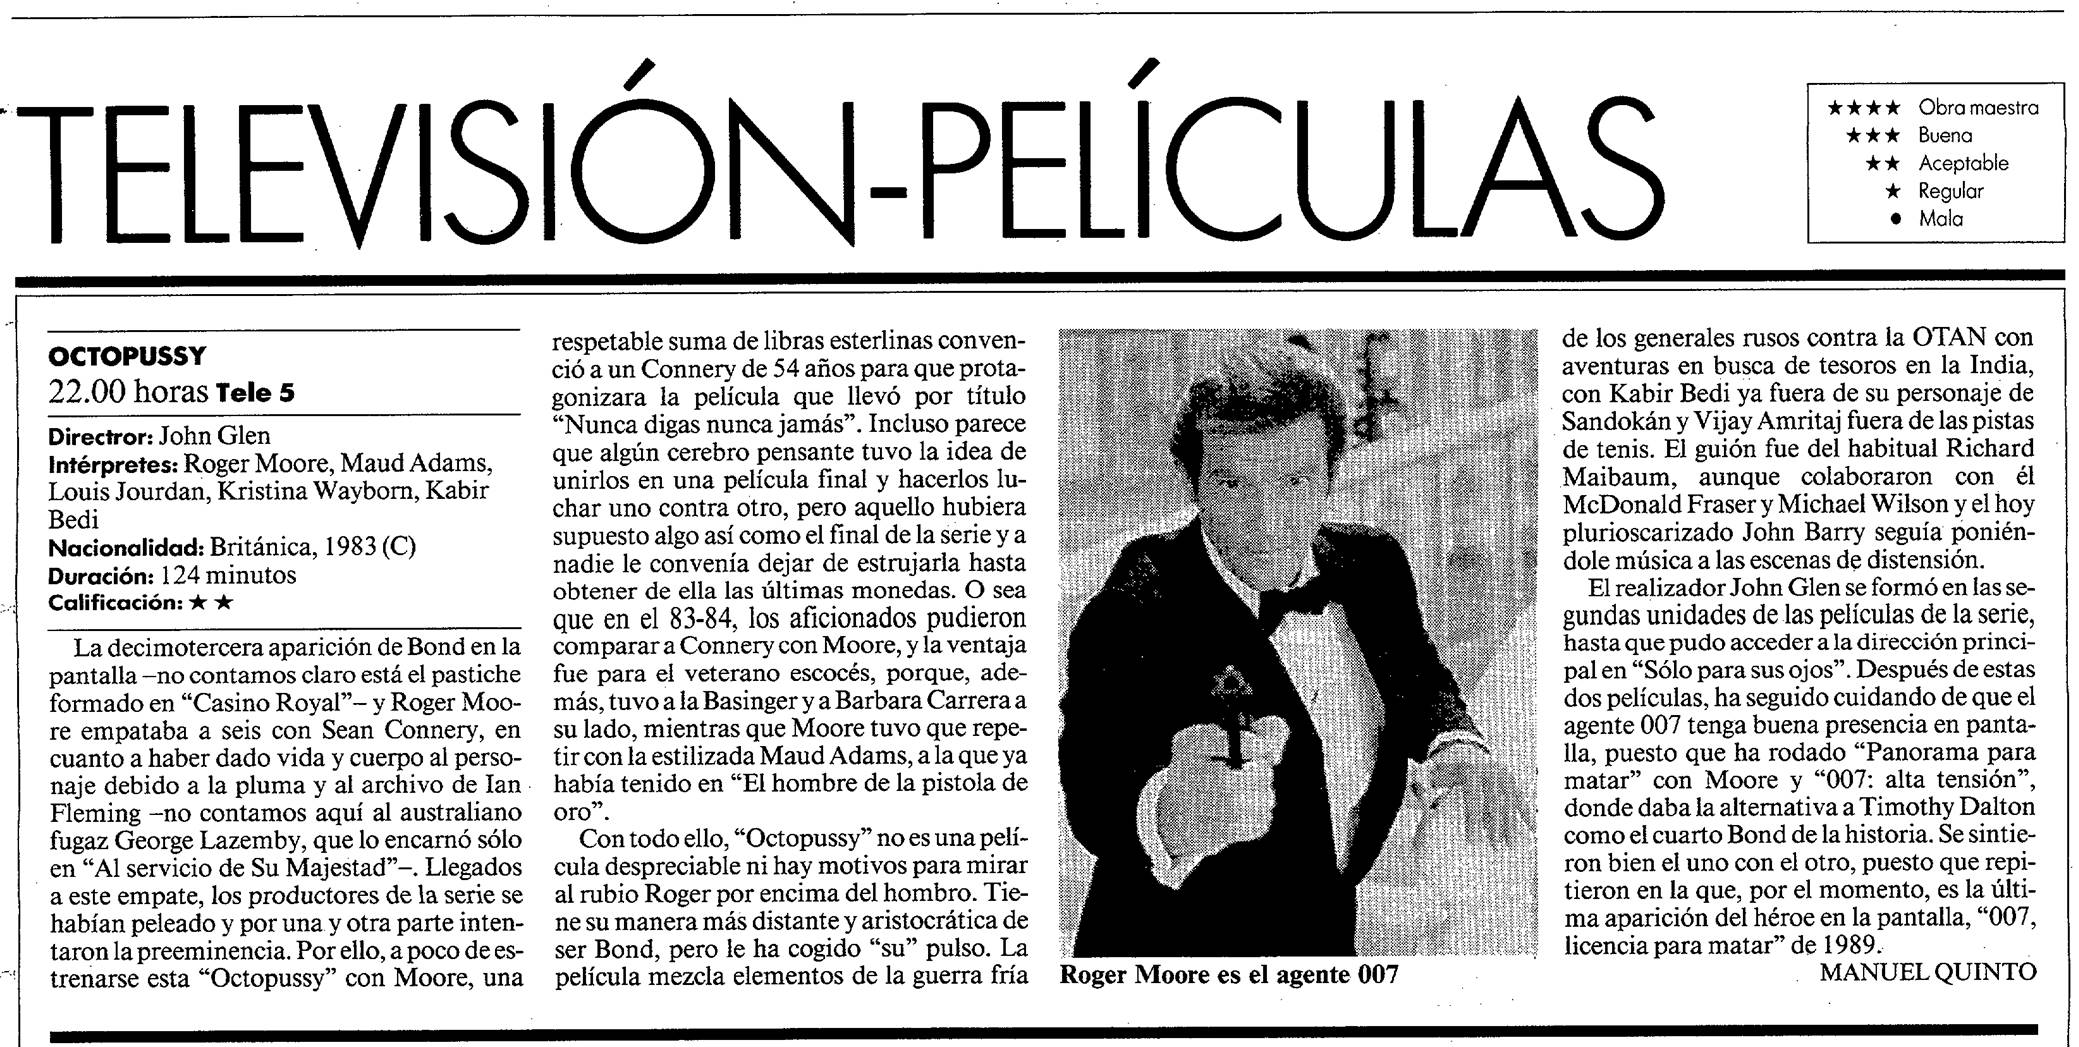 13 1993 04 21 La Vanguardia Revista 008 Tele5